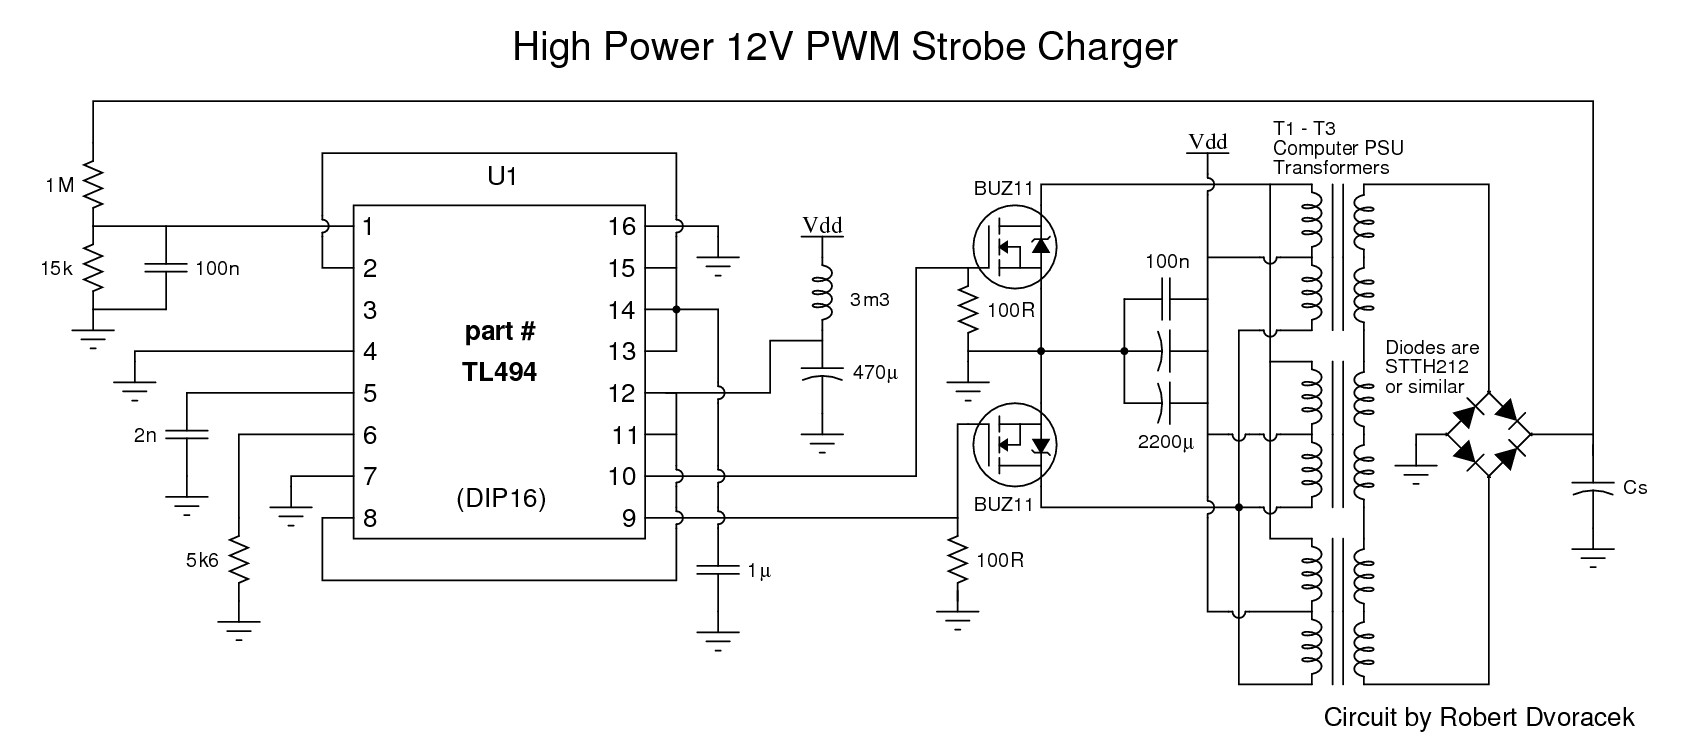 High Power PWM Strobe Charger